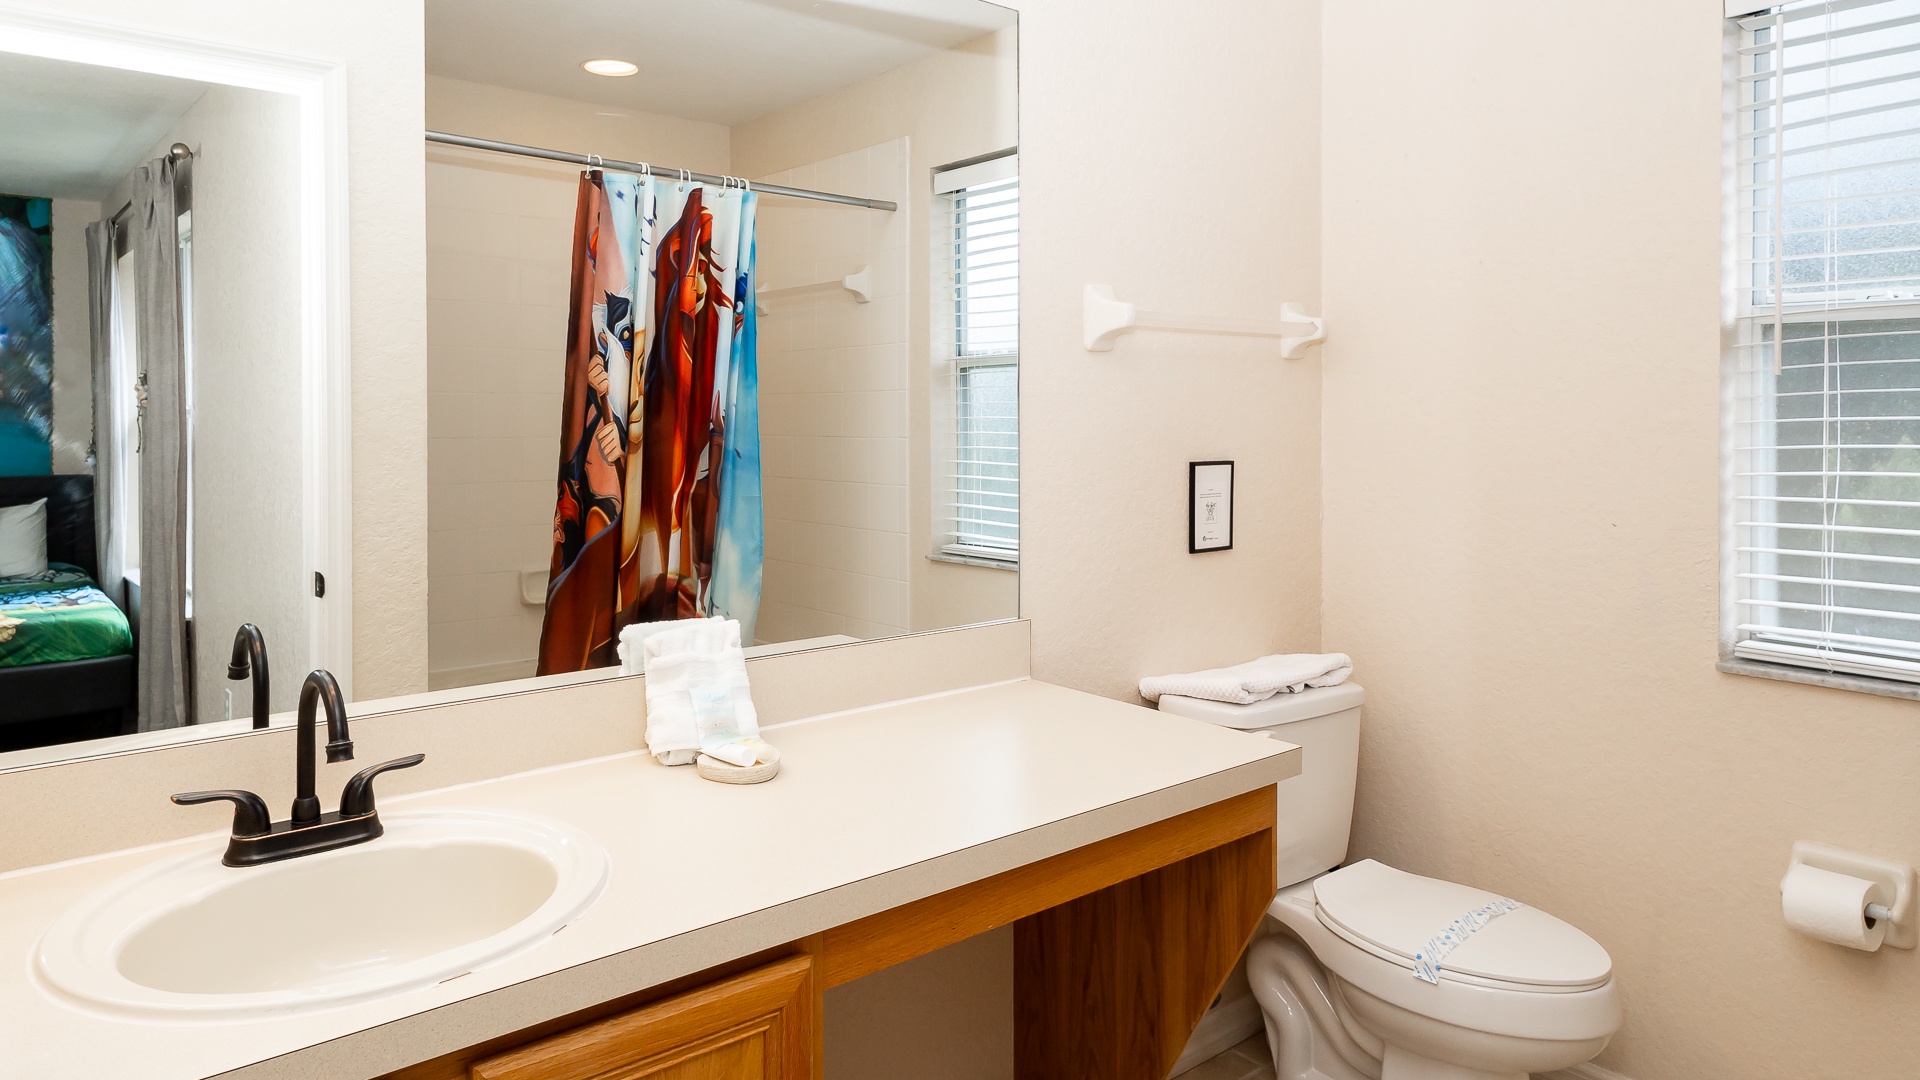 This en suite bath includes an oversized single vanity & shower/tub combo